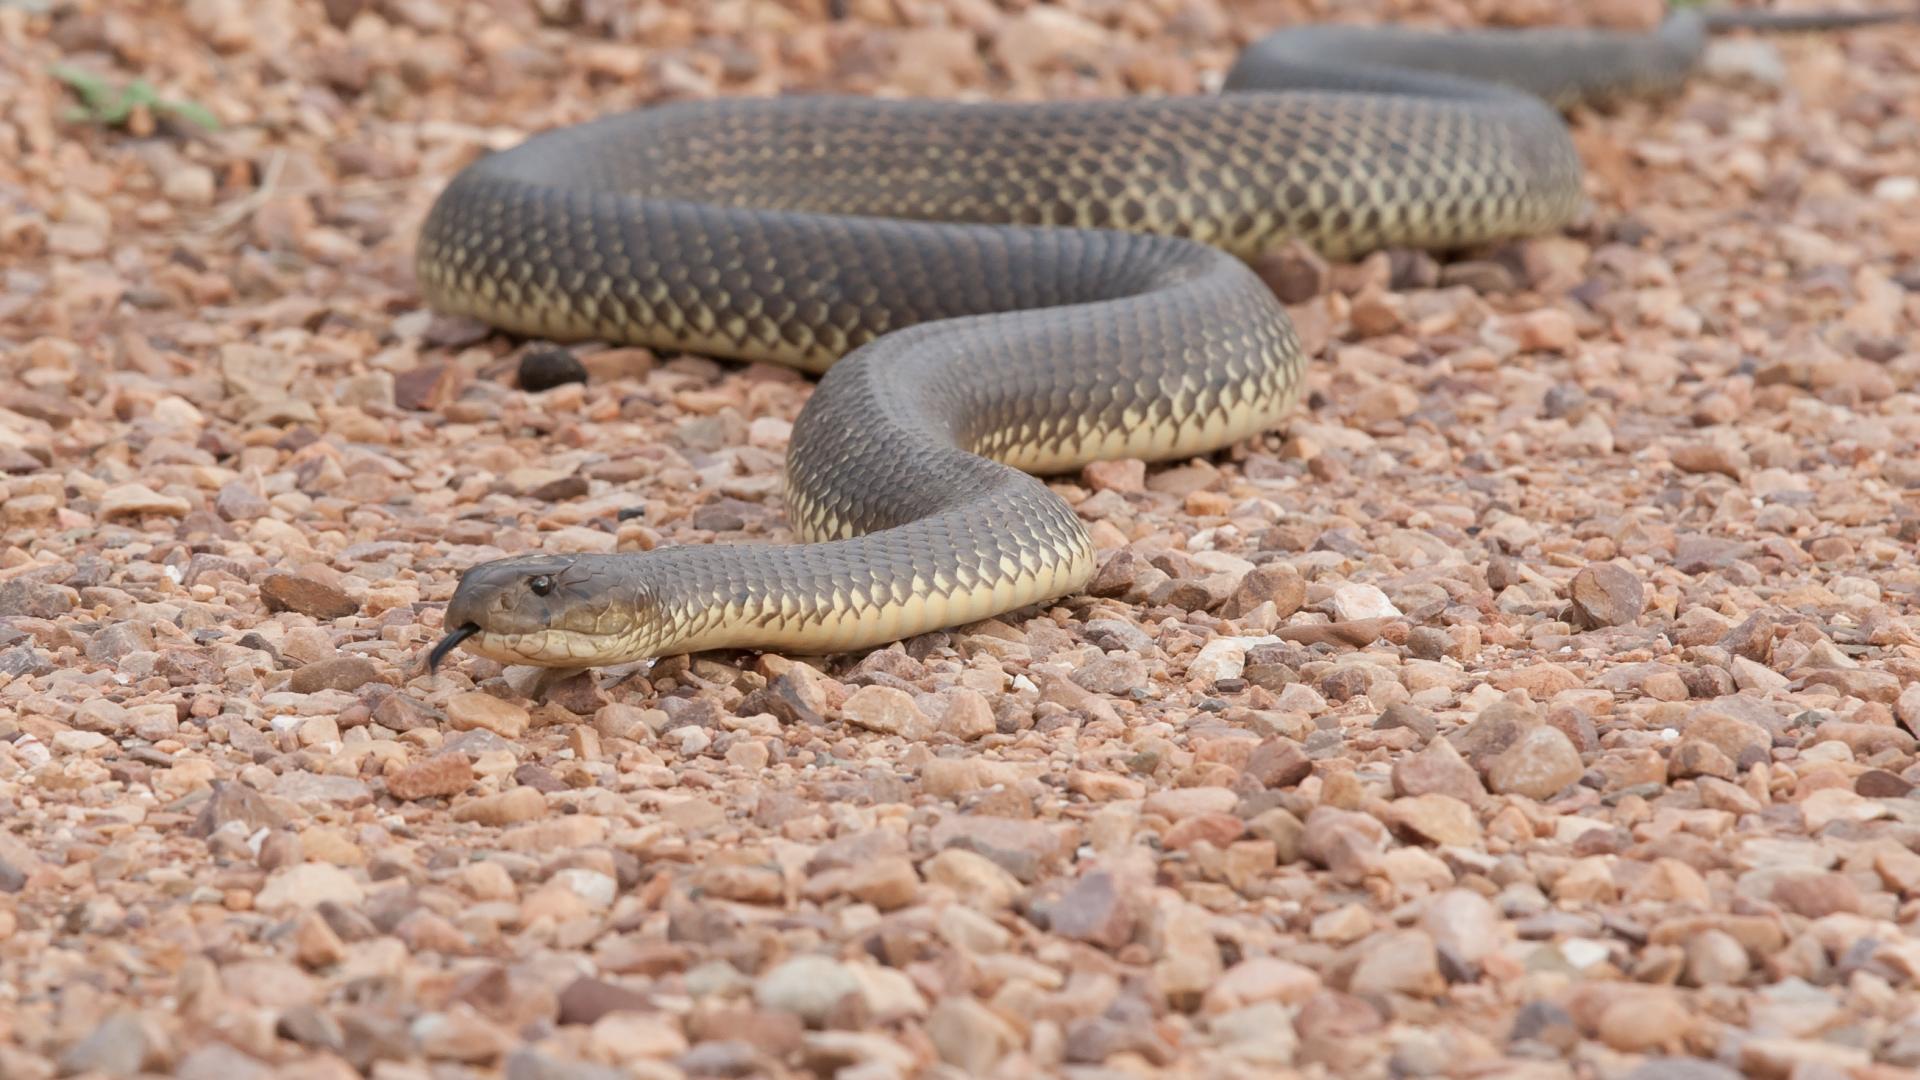 Invasive snake species on the ground